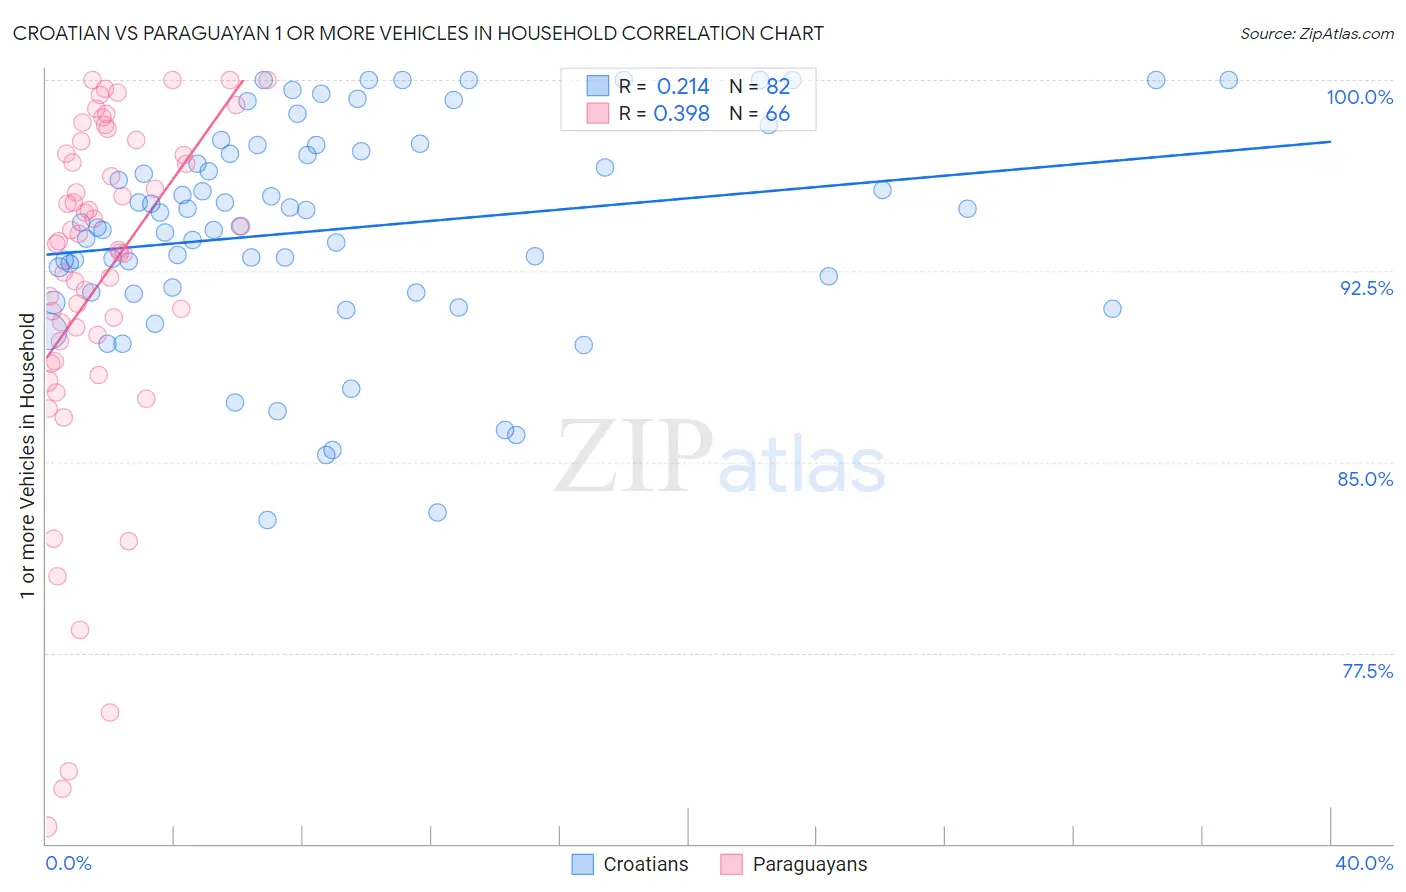 Croatian vs Paraguayan 1 or more Vehicles in Household